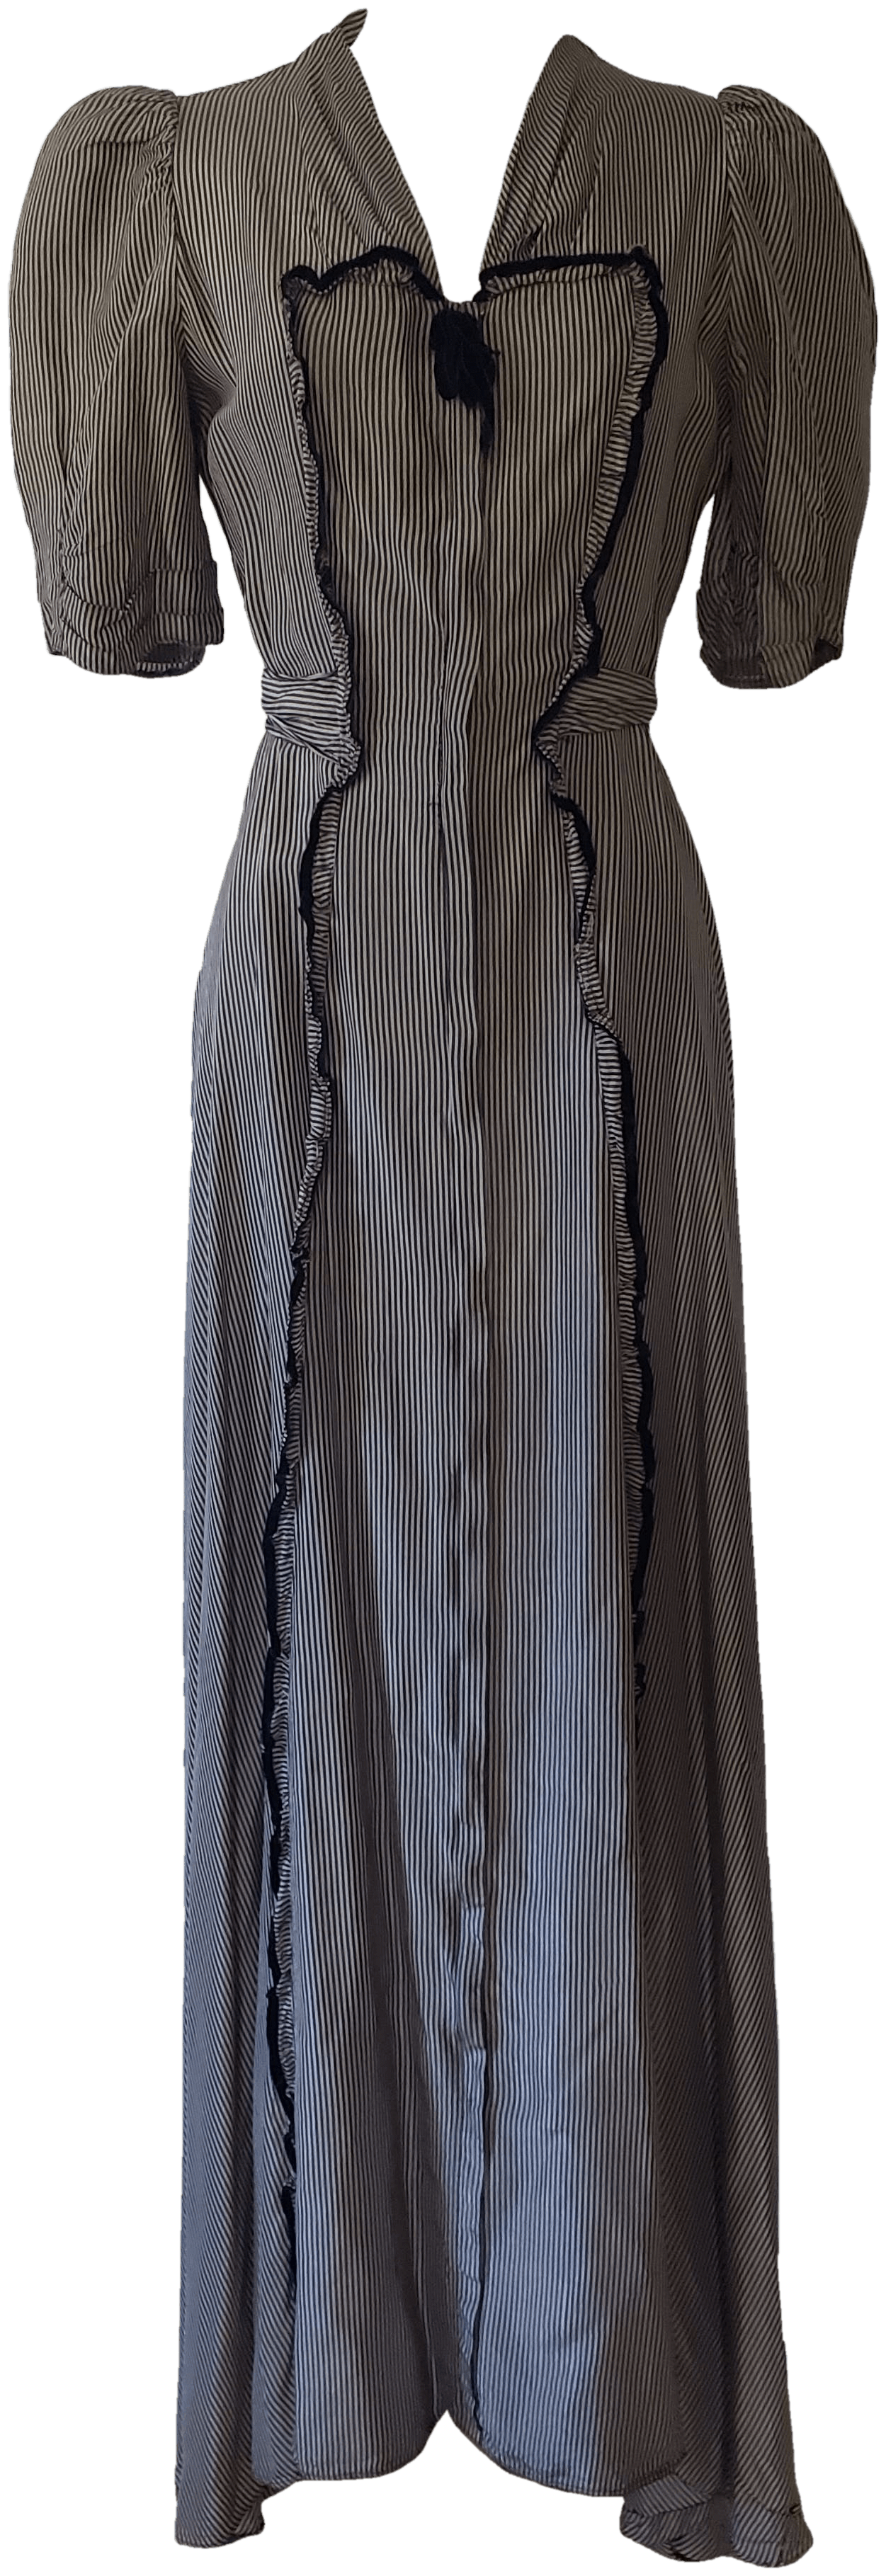 gray and white striped maxi dress